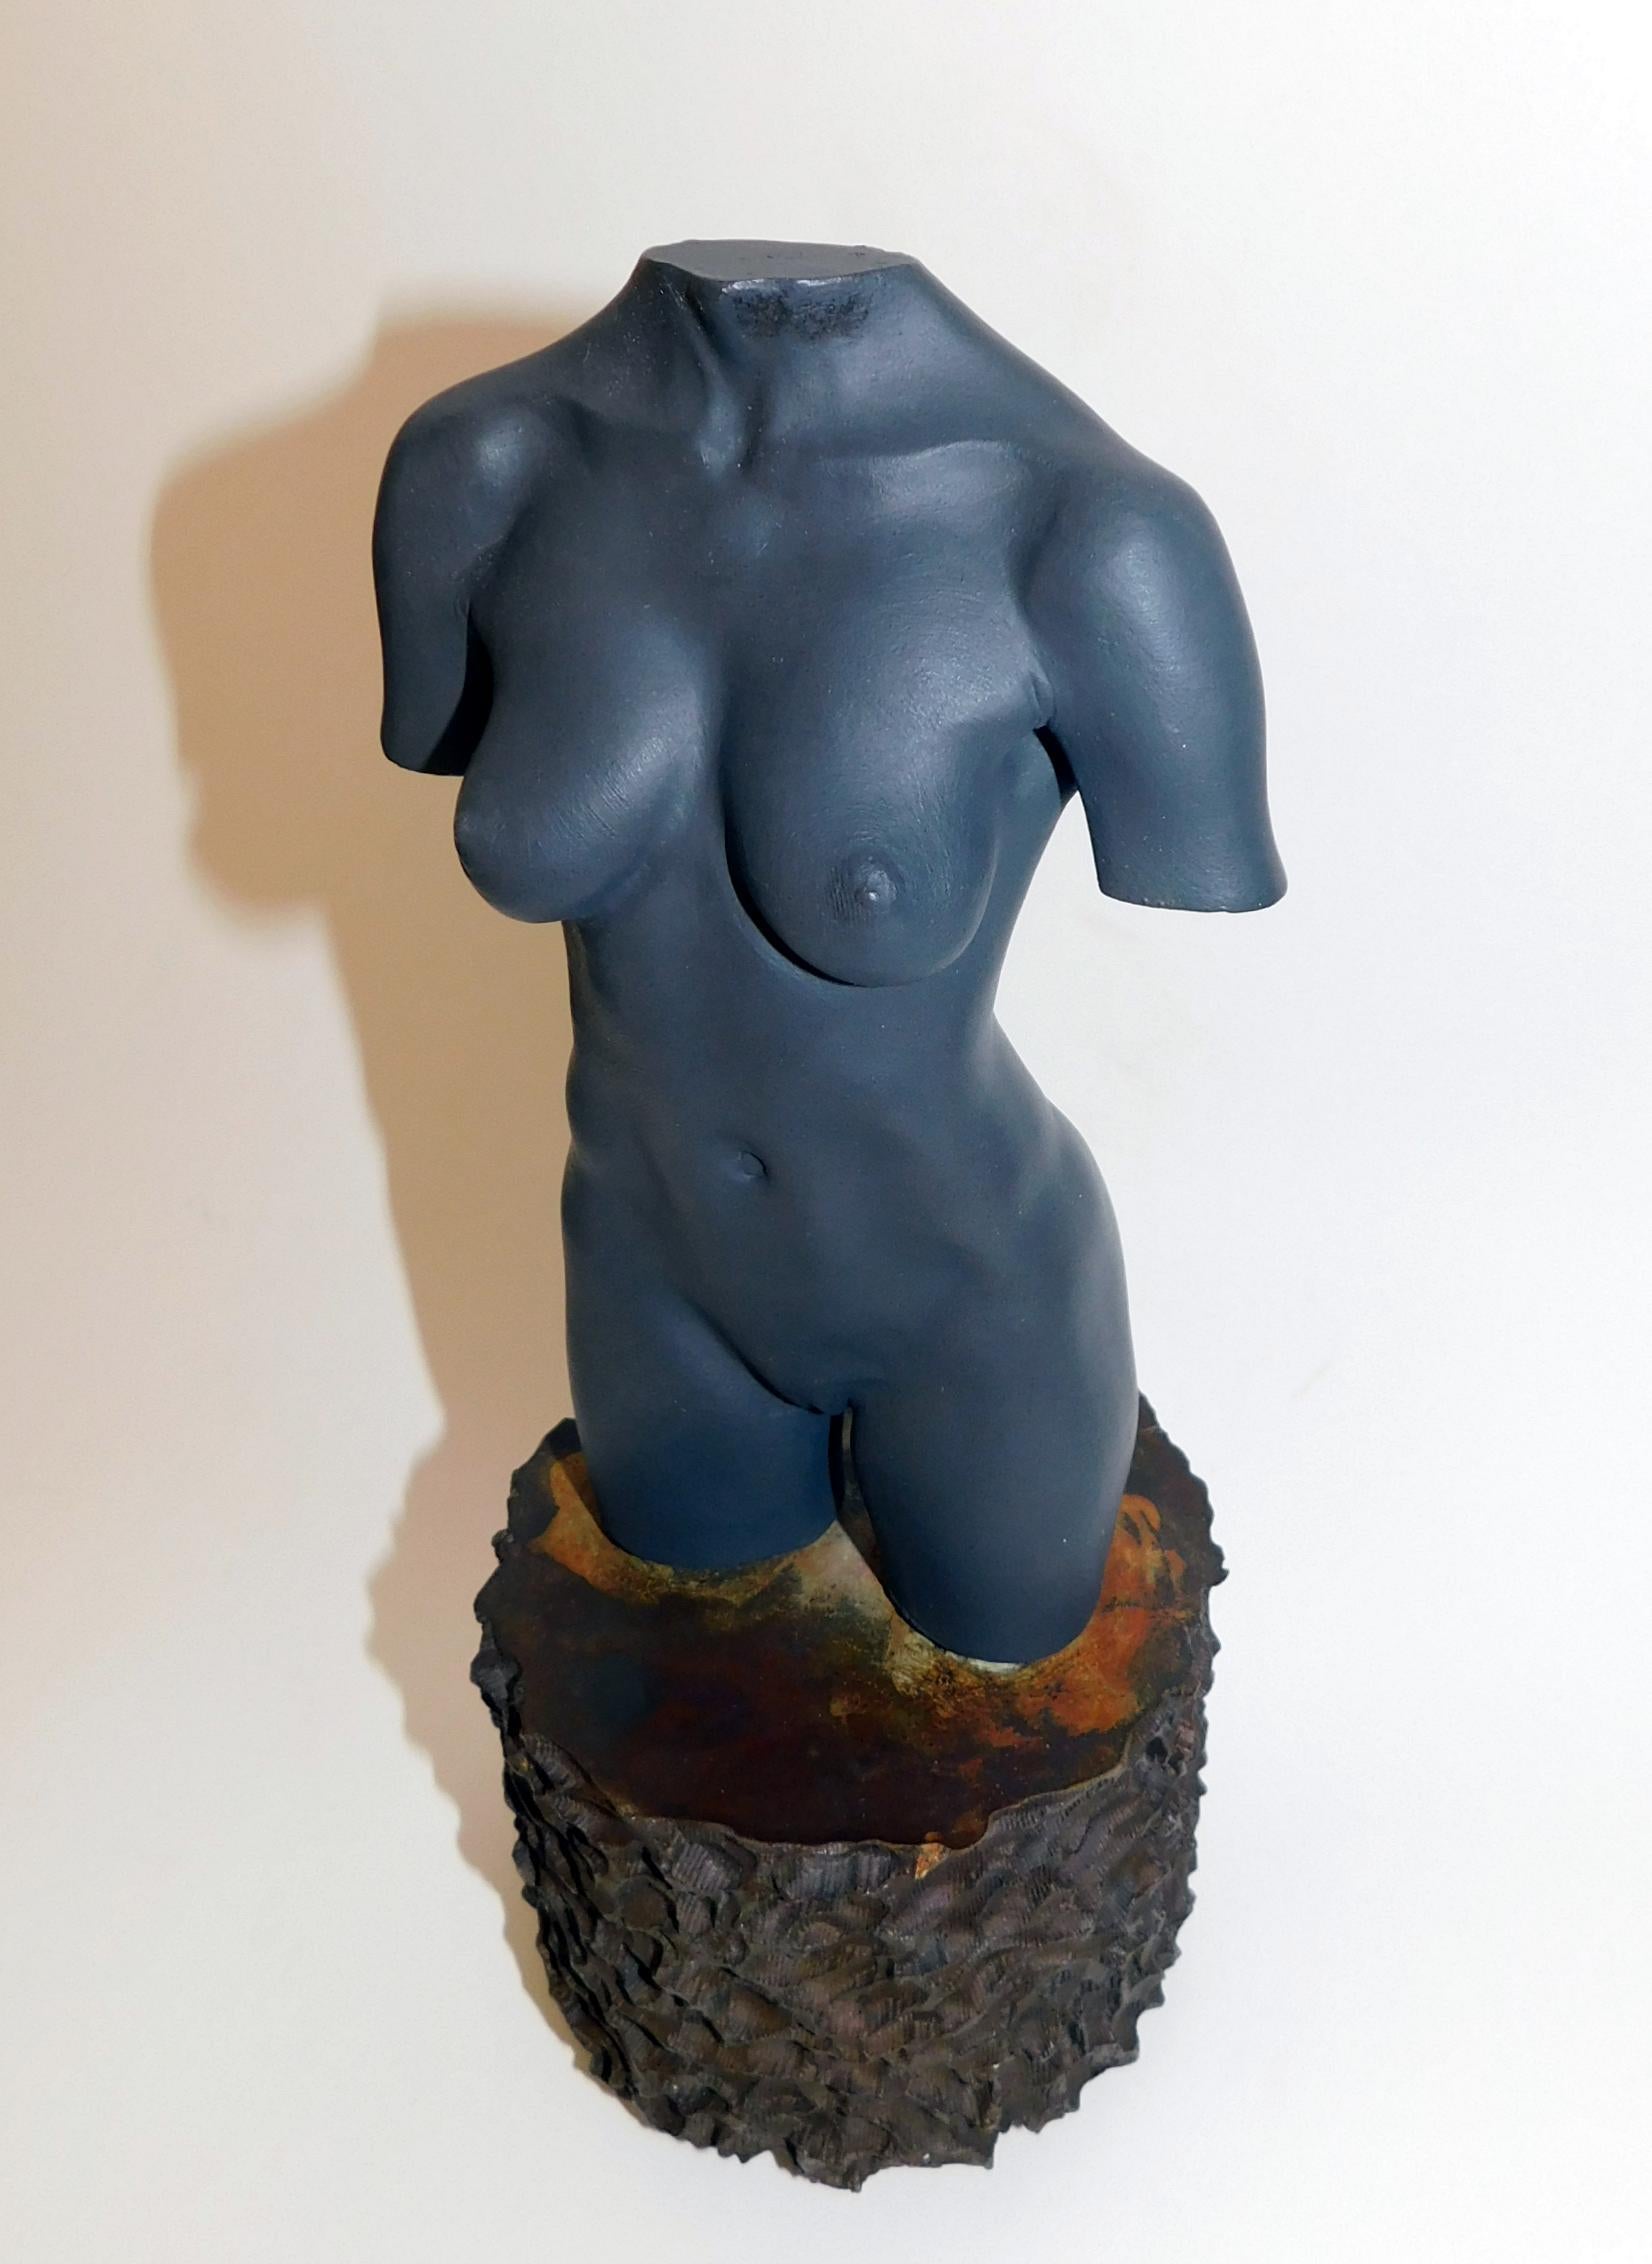 Bronze female torso by Robert Graham, edition of 3500.
Moca Torso, 1992-1995
Inscribed: R Graham JUAN
Dimensions: 11 x 4 1/2 x 4 1/2 in. (27.94 x 11.43 x 11.43 cm.)
Artist name: Robert Graham (1938-2008)
Medium: Bronze, edition of